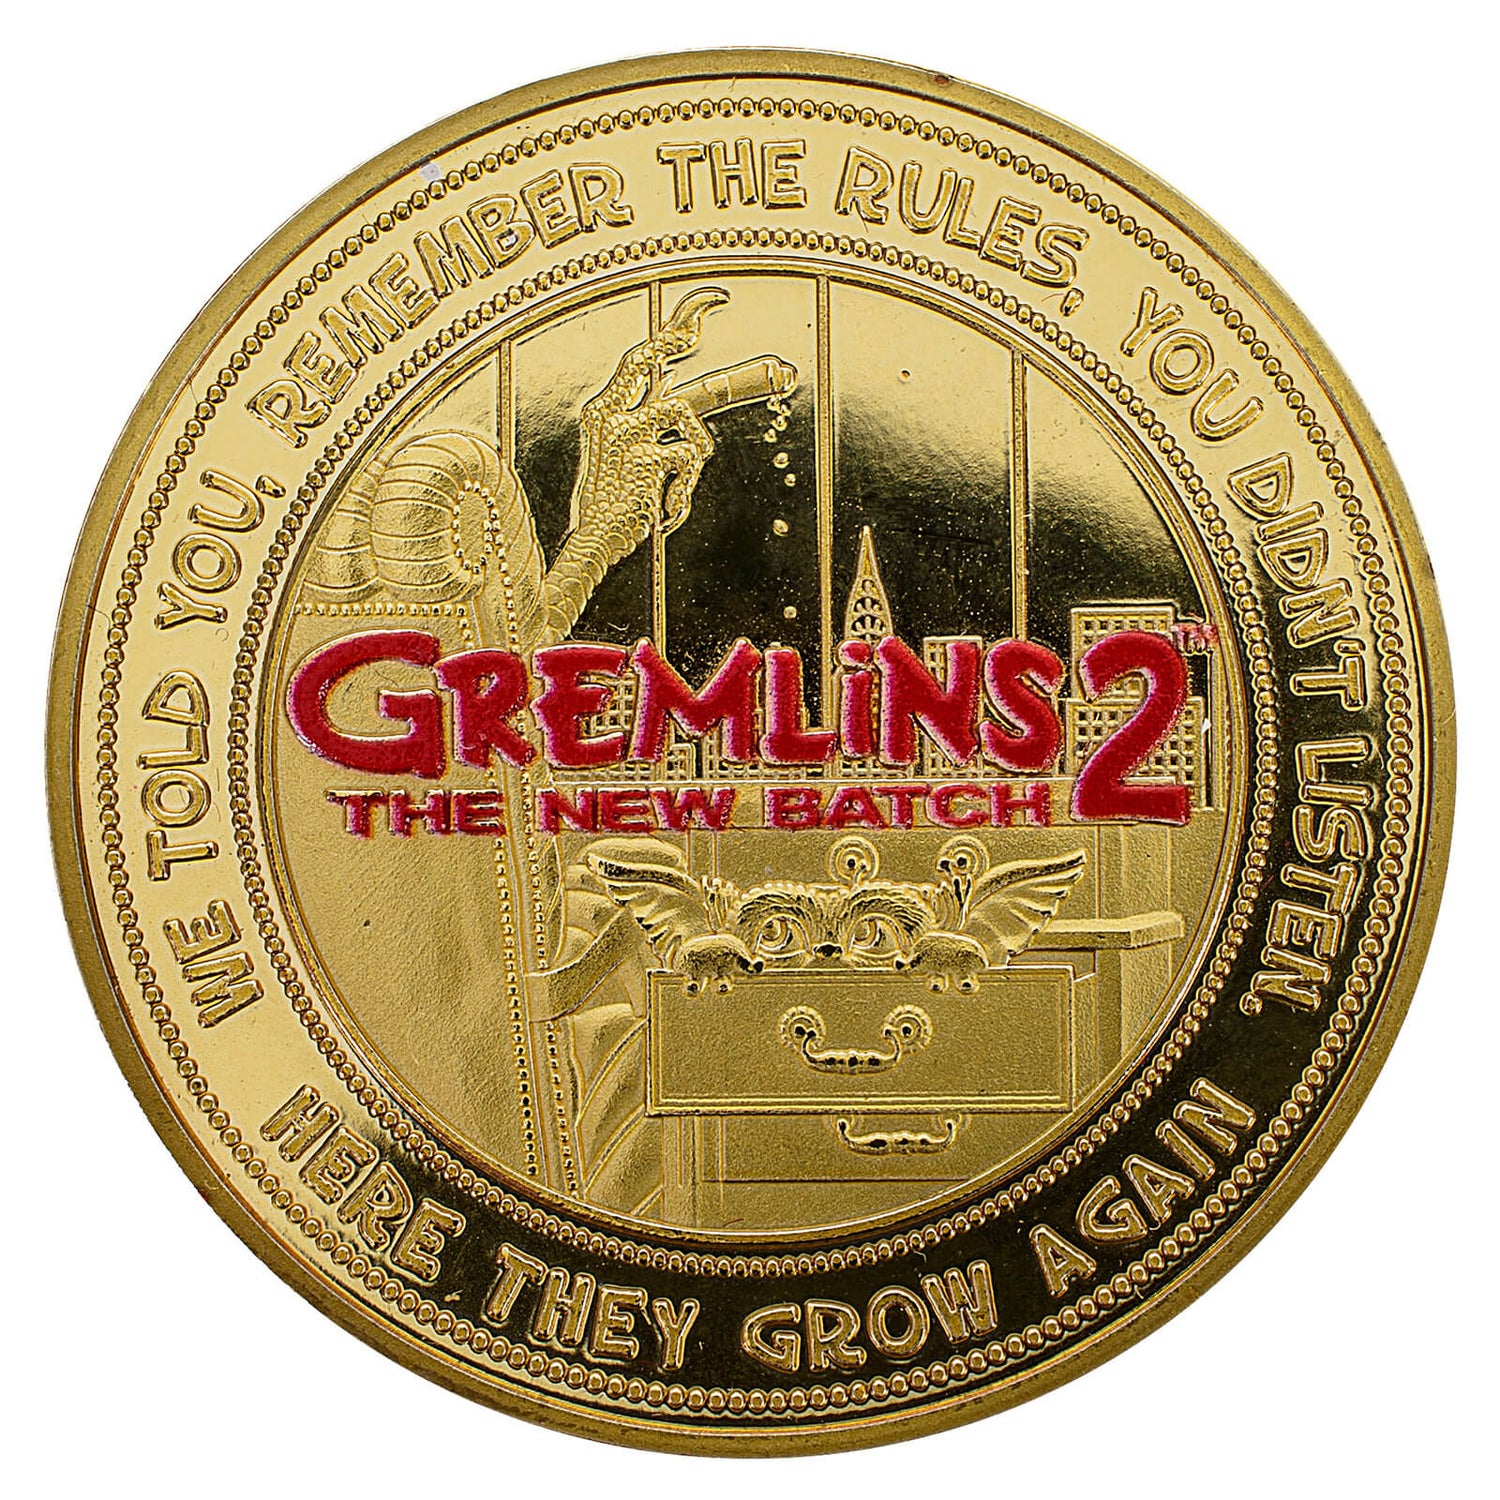 Gremlins 2: Collectible Coin